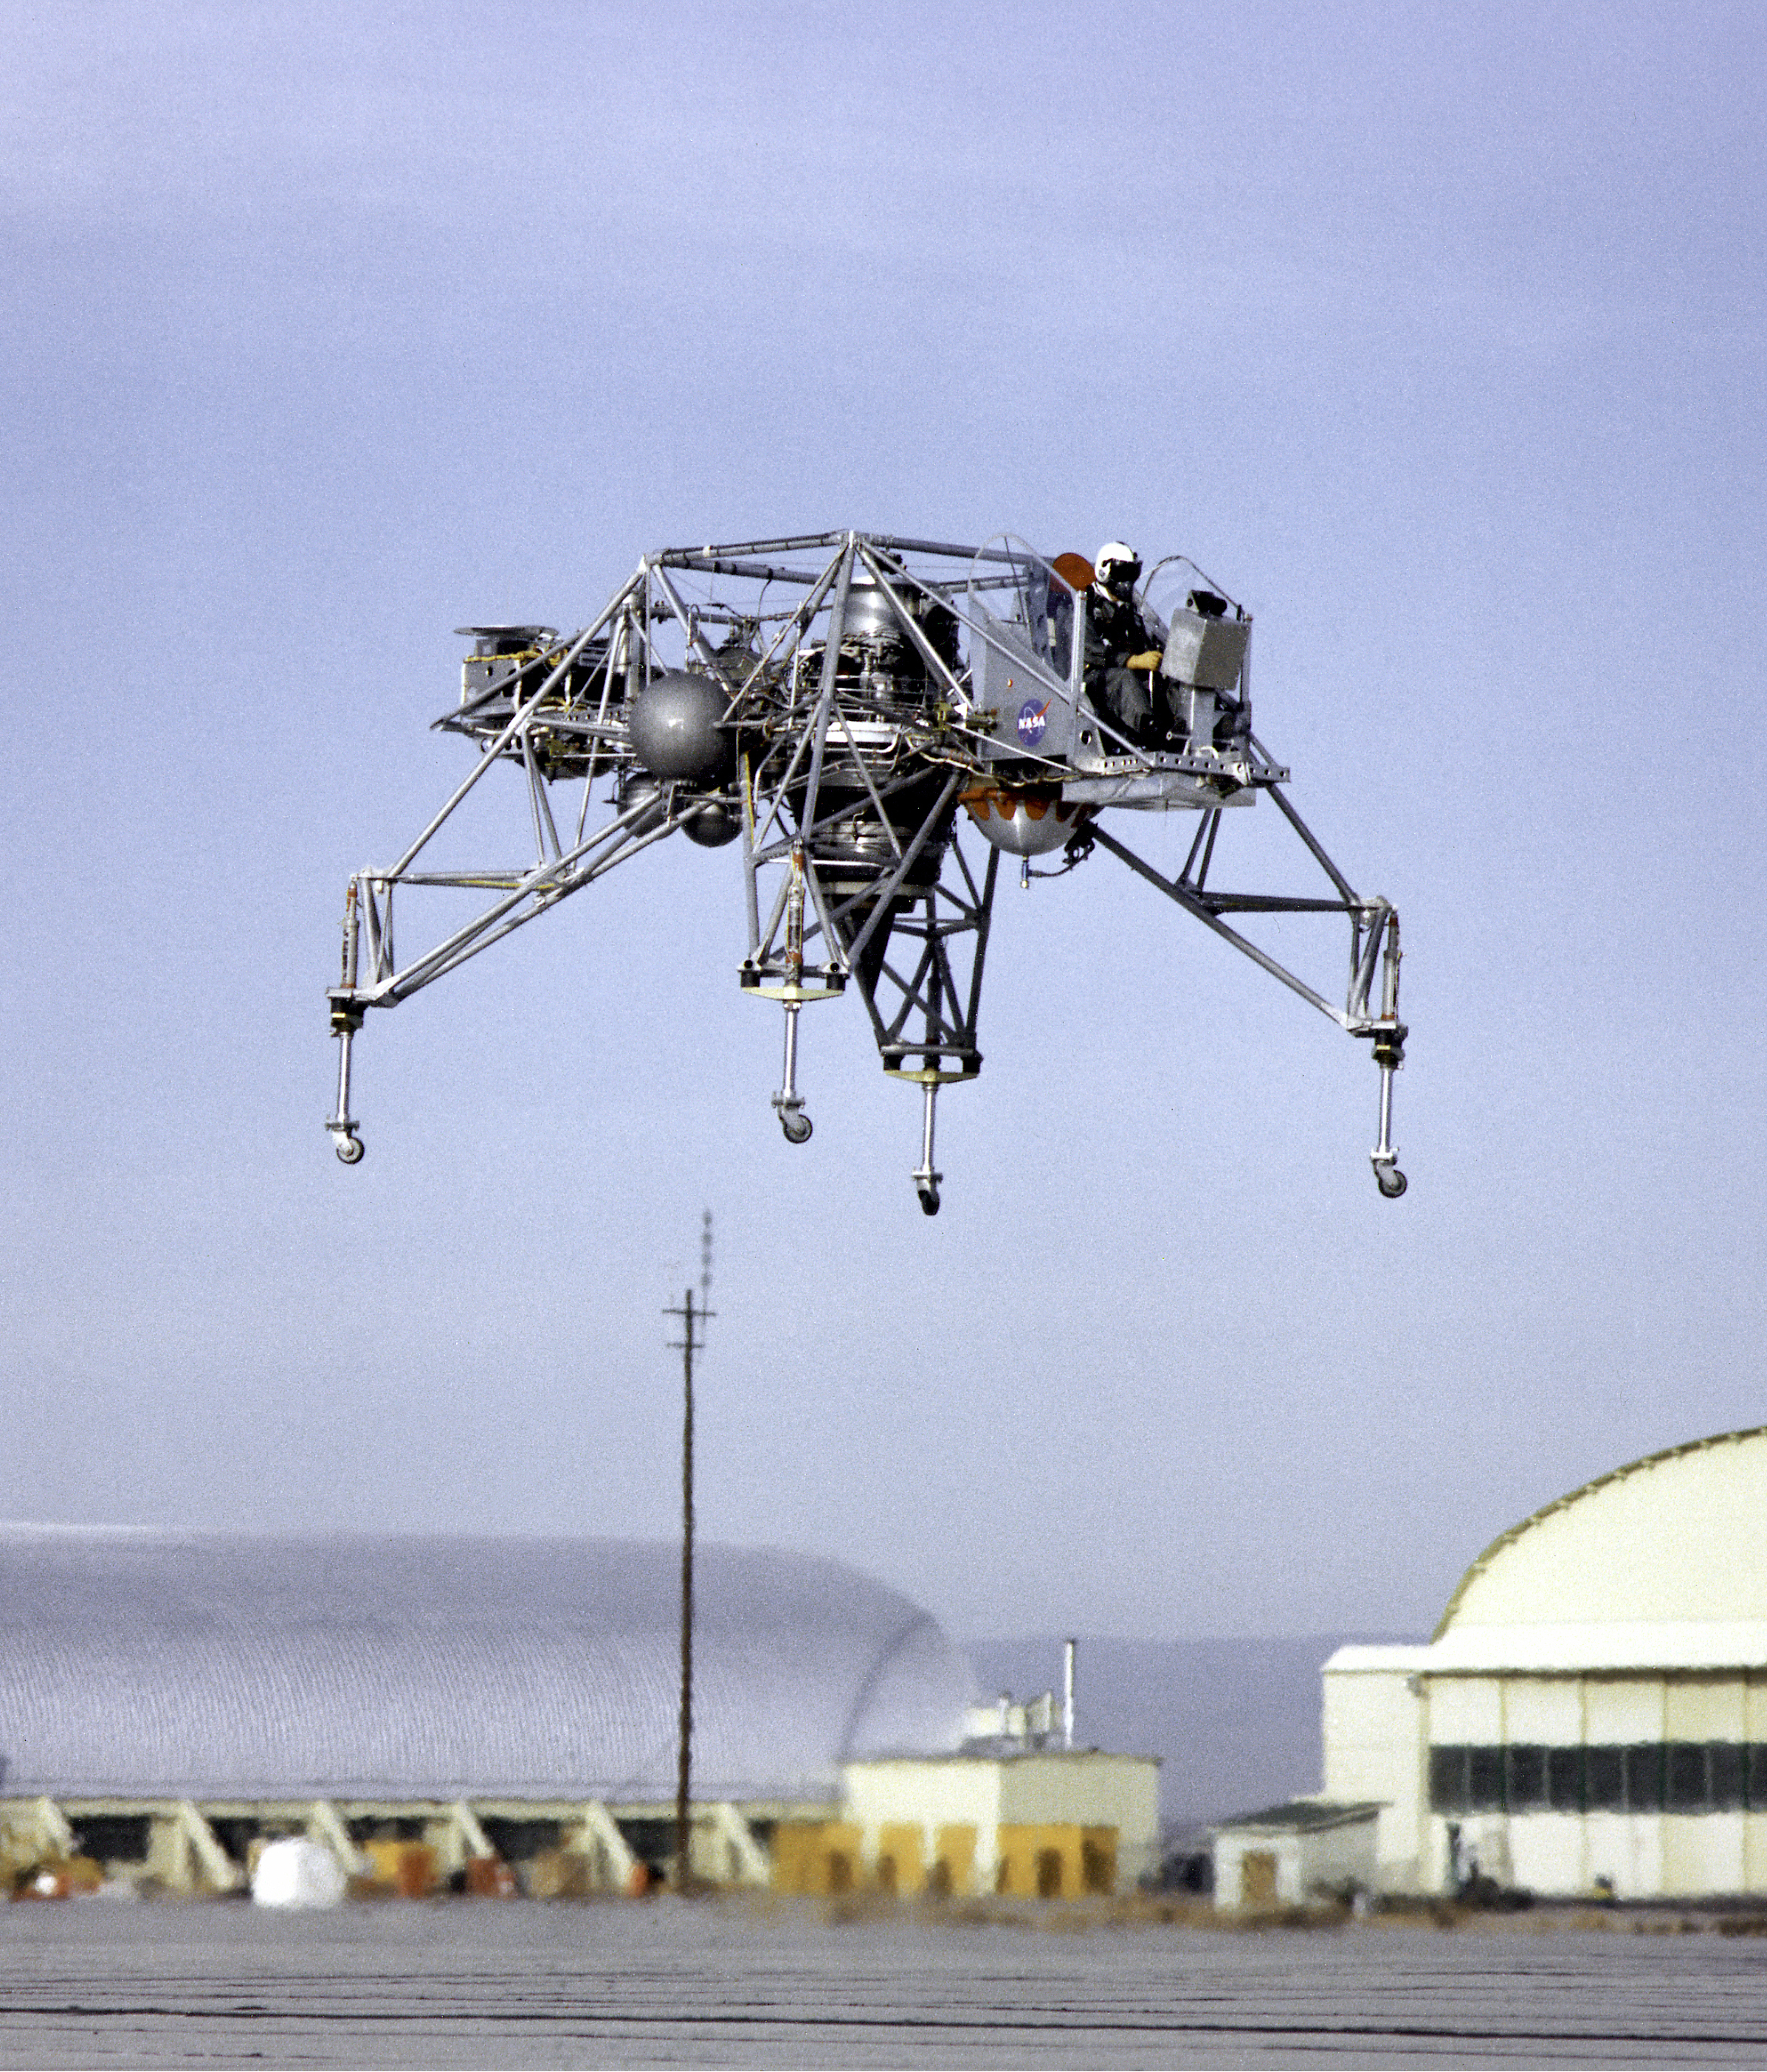 Lunar Landing Research Vehicle in Flight - GPN-2000-000215